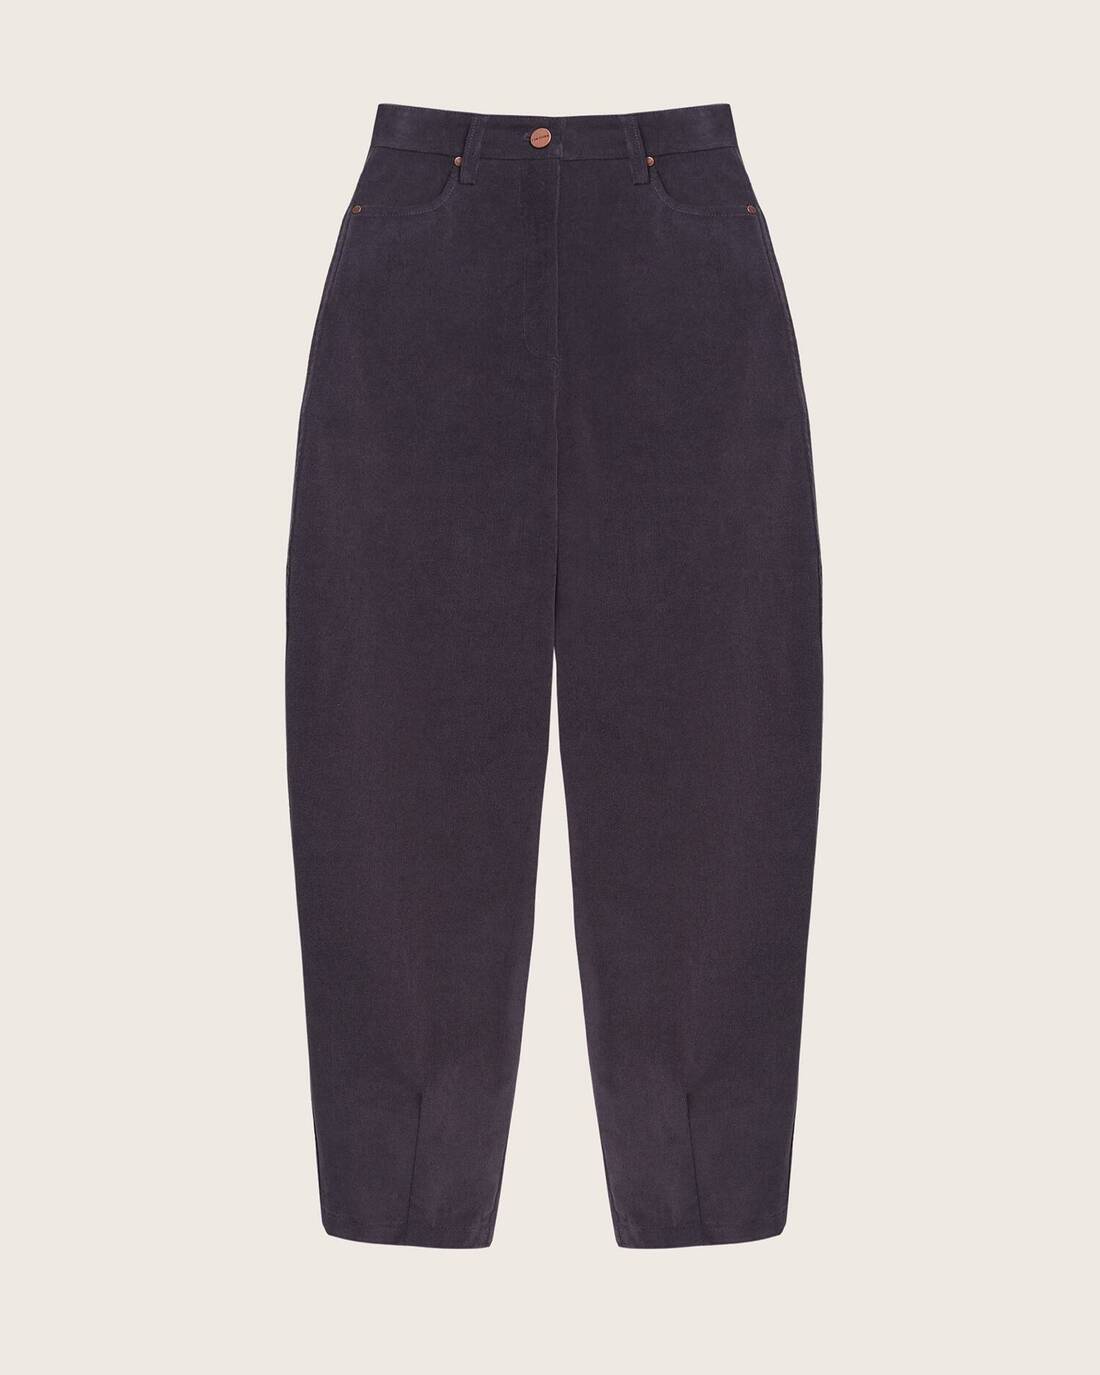 High-waisted corduroy trousers